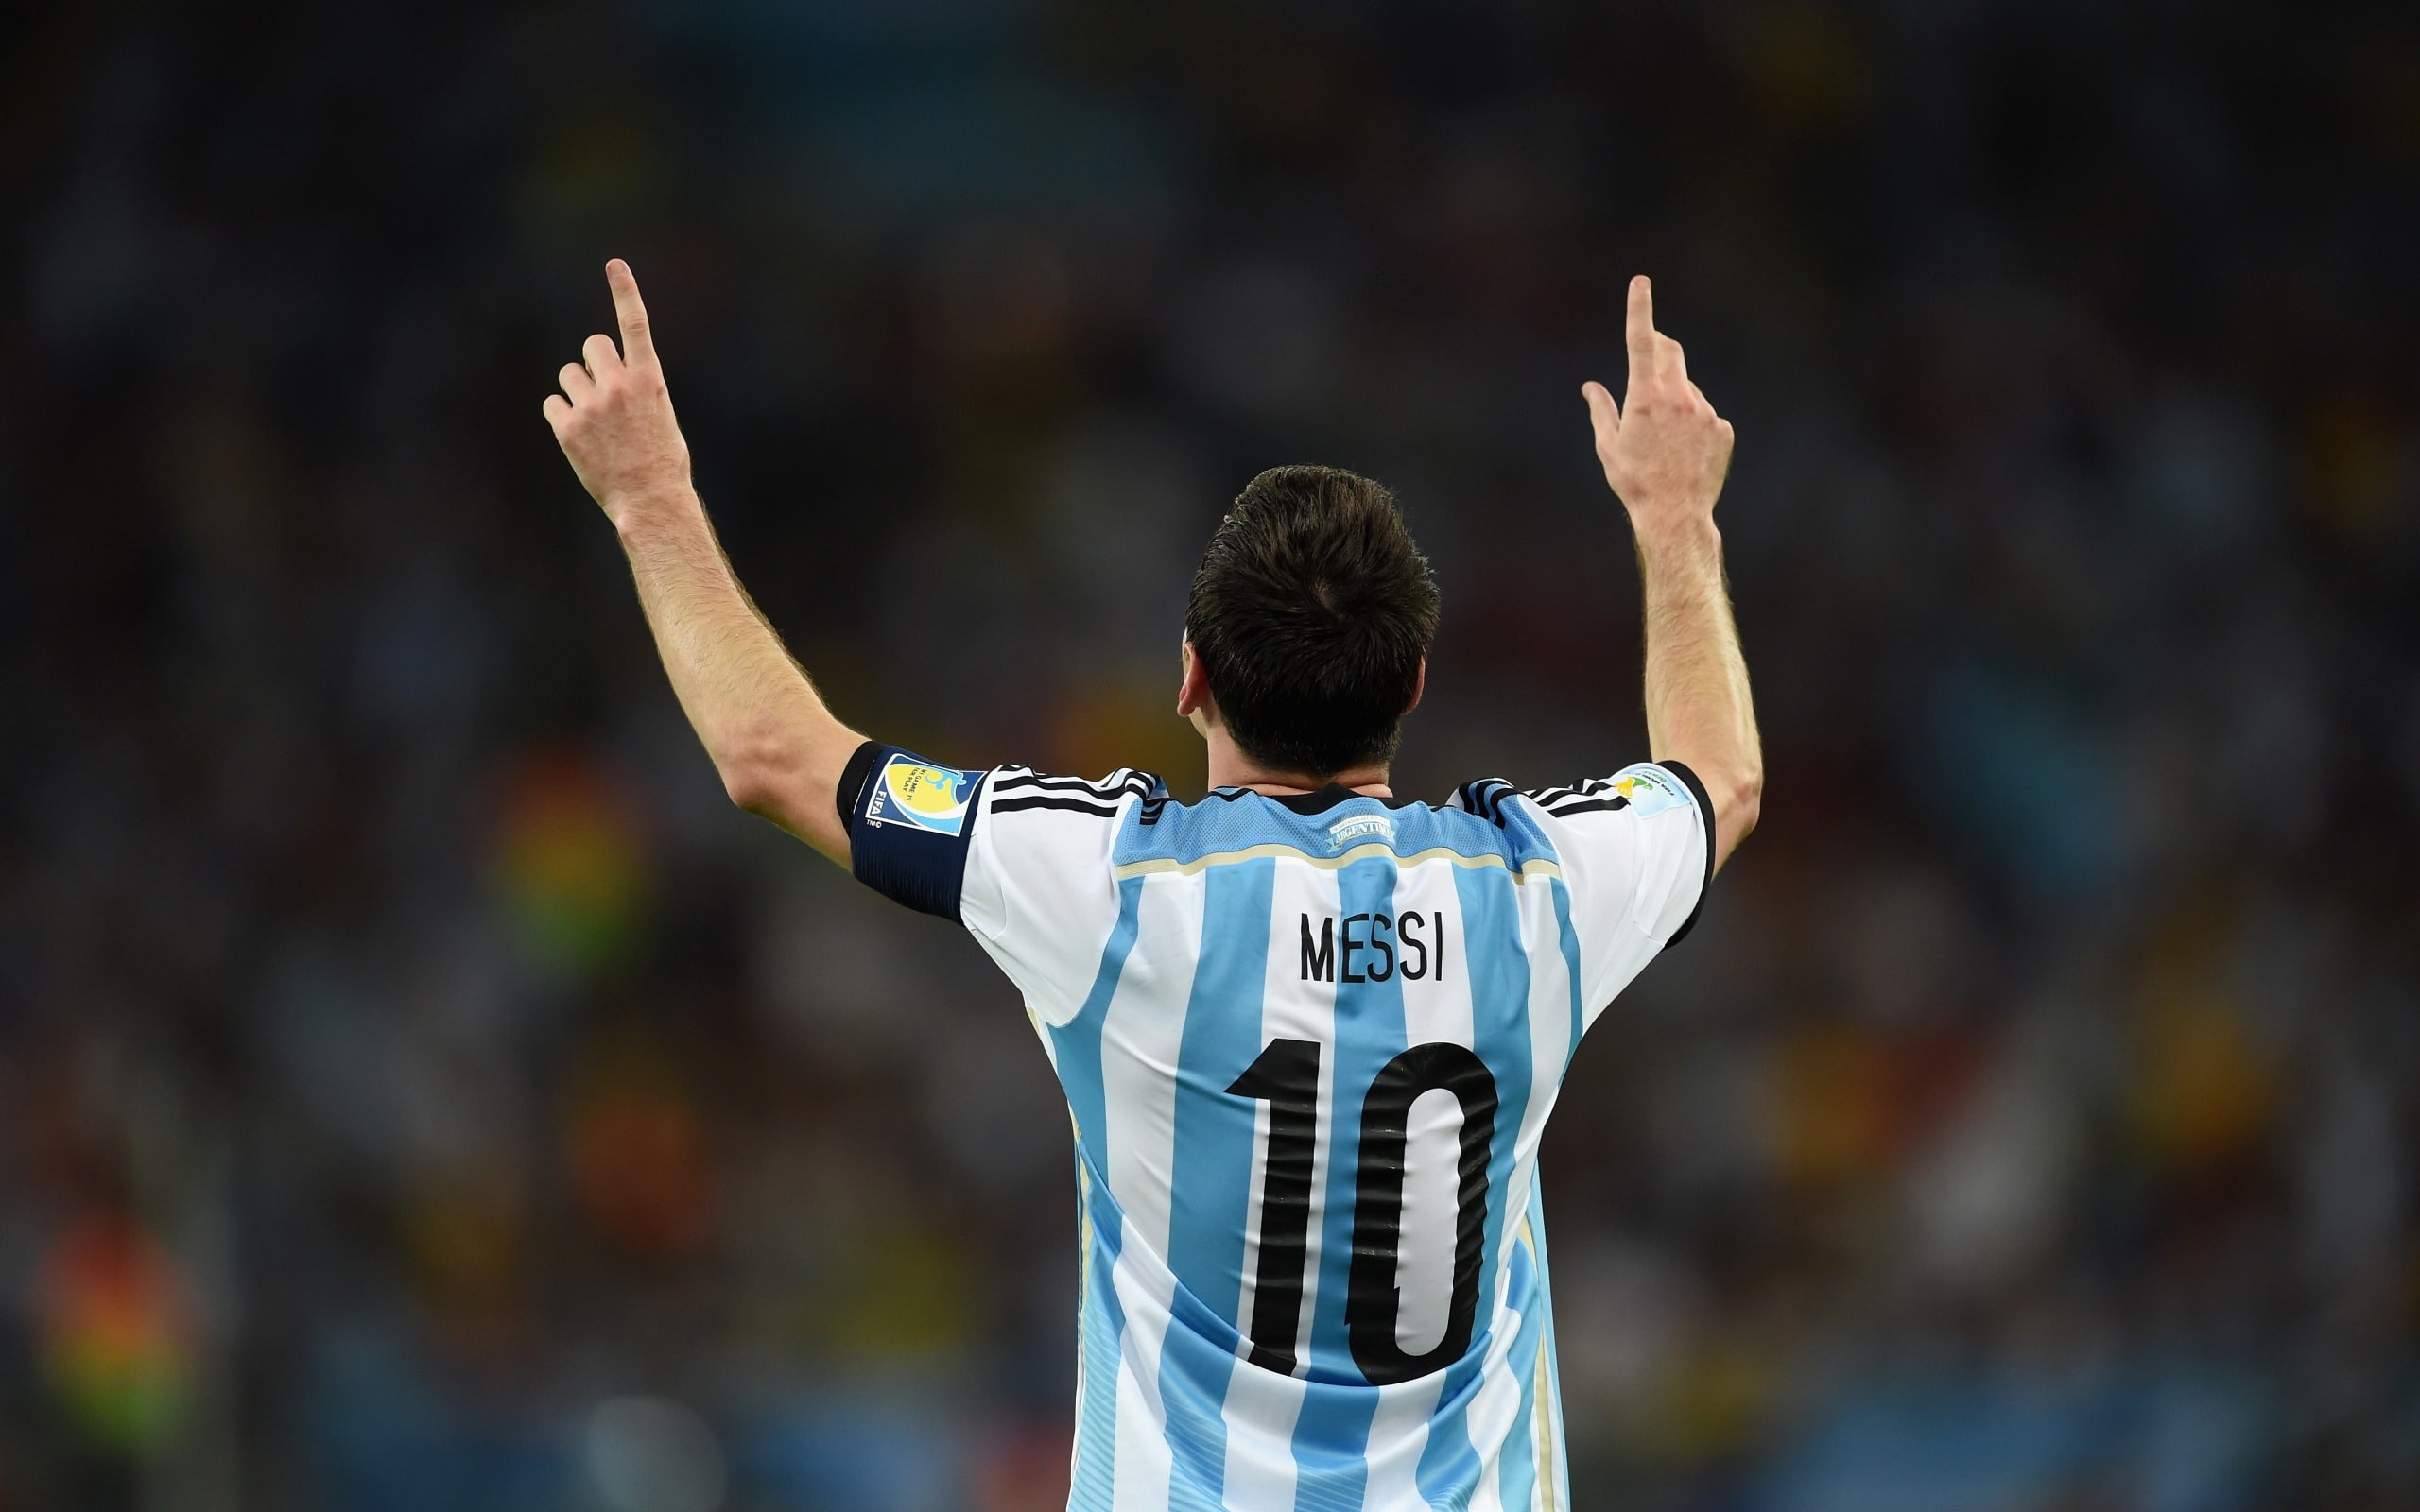 Lionel Messi-FIFA BALLON DOR 2015 Wallpaper 06, rear view, human arm